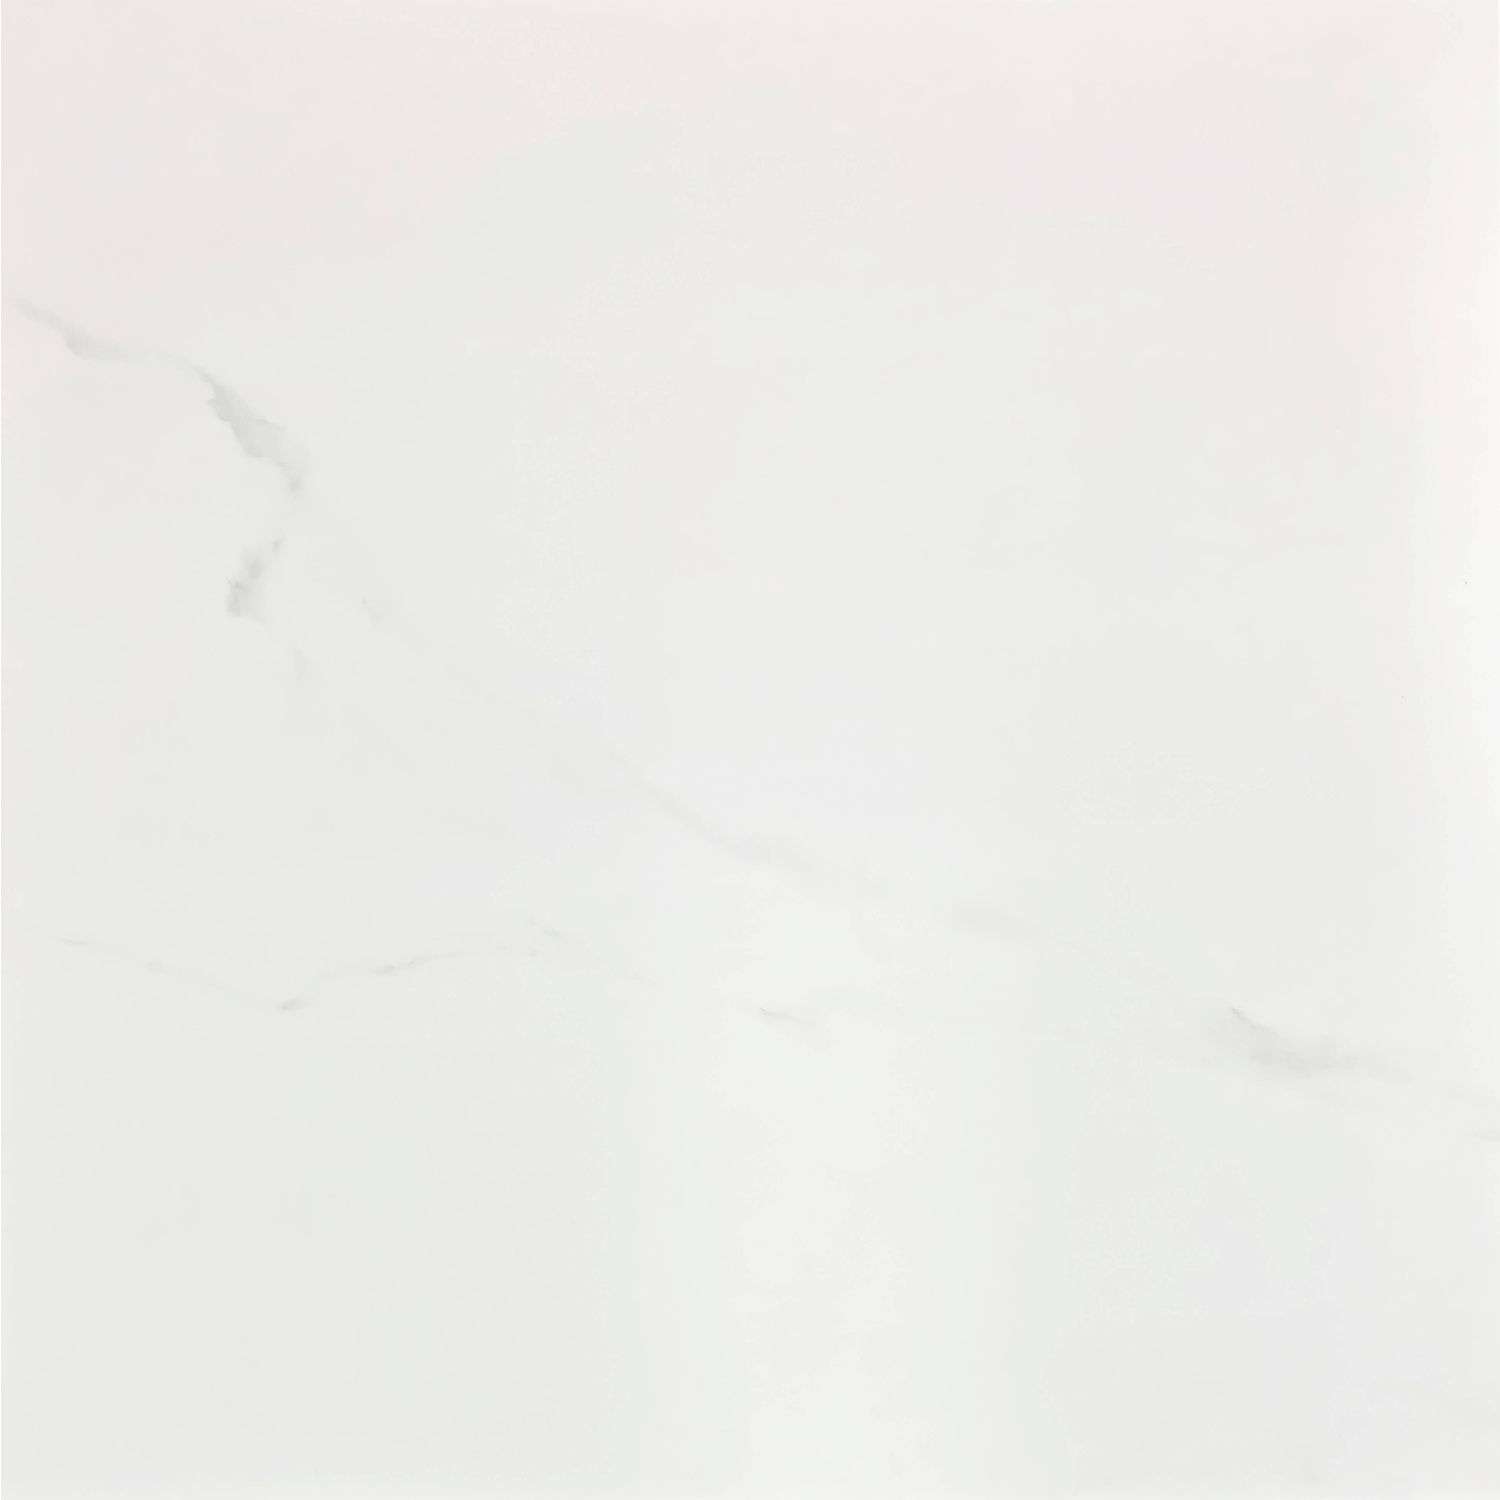 Floorest Porcelain Tile - Bianco Light 24 x 24 16SF/BOX - CT22006